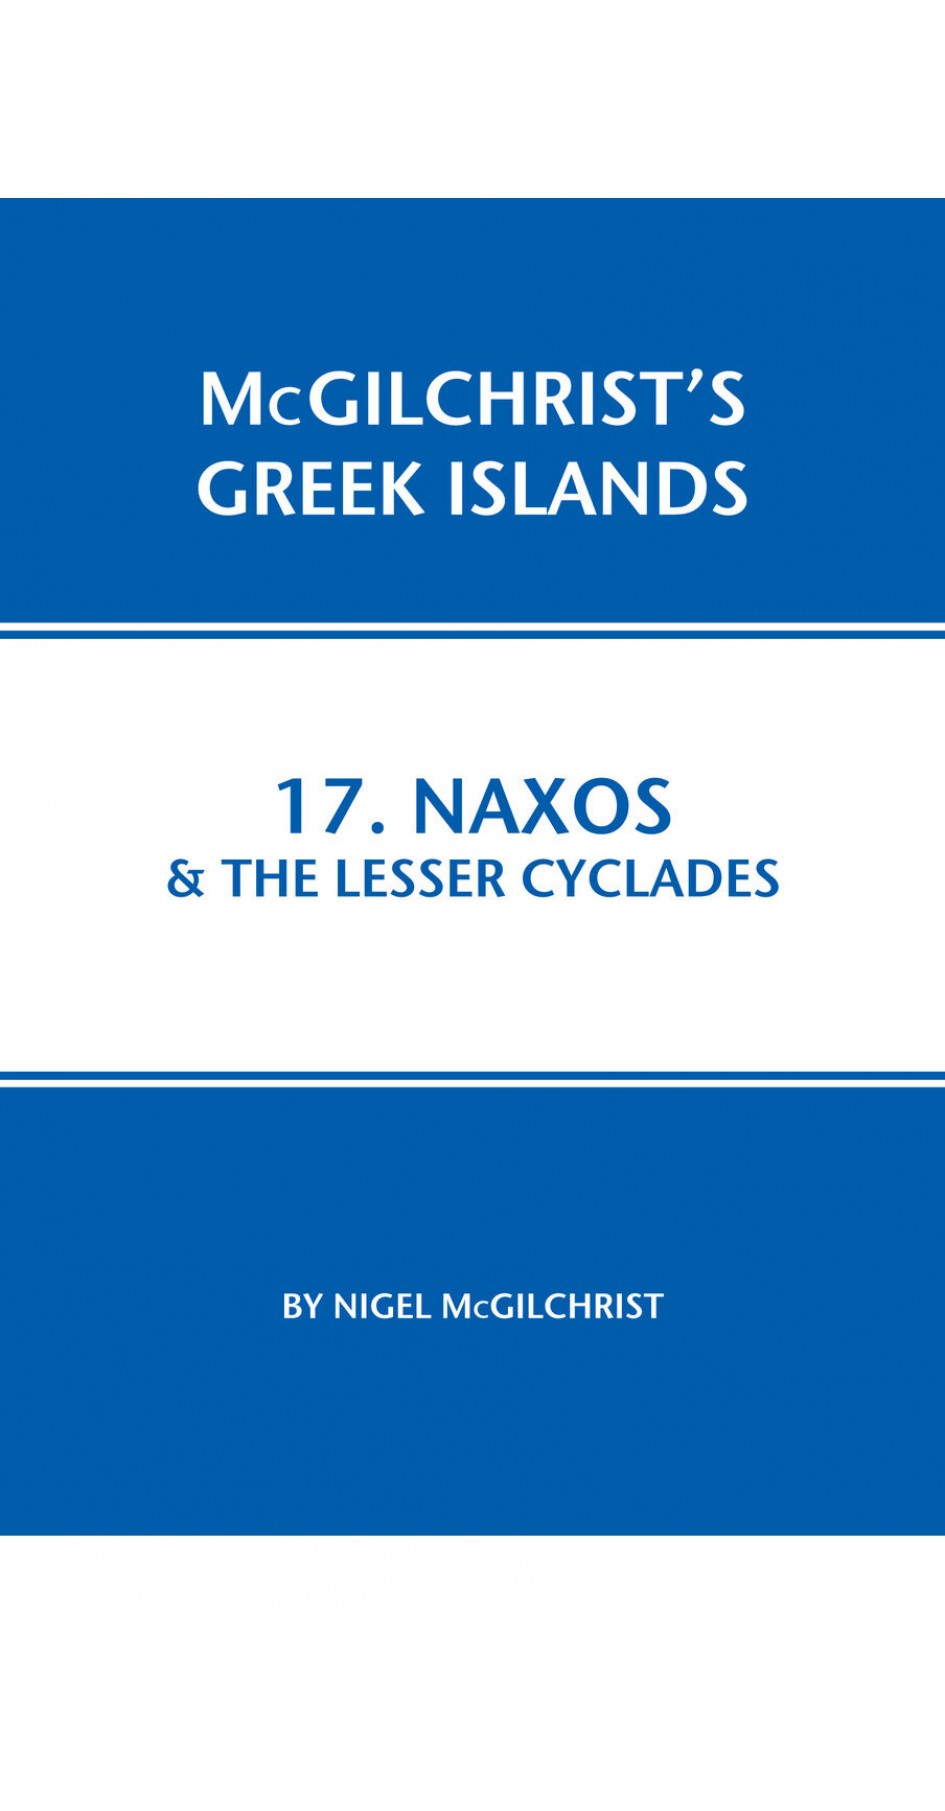 17. Naxos & the Lesser Cyclades - McGilchrist’s Greek Islands